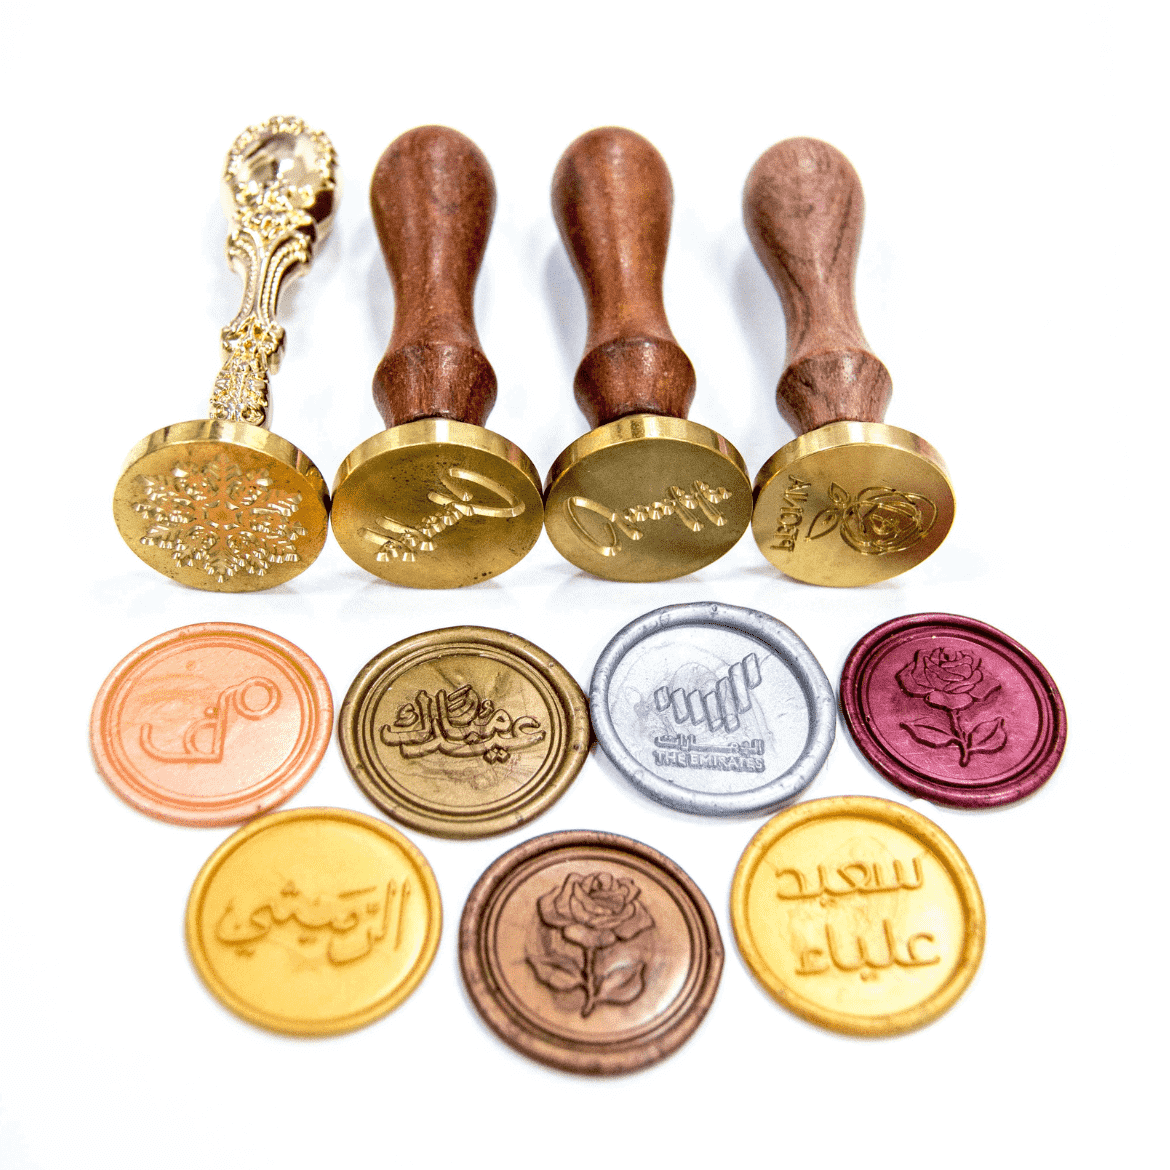 Stamp Maker, No.1 Rubber Stamp Maker Dubai & Abu Dhabi